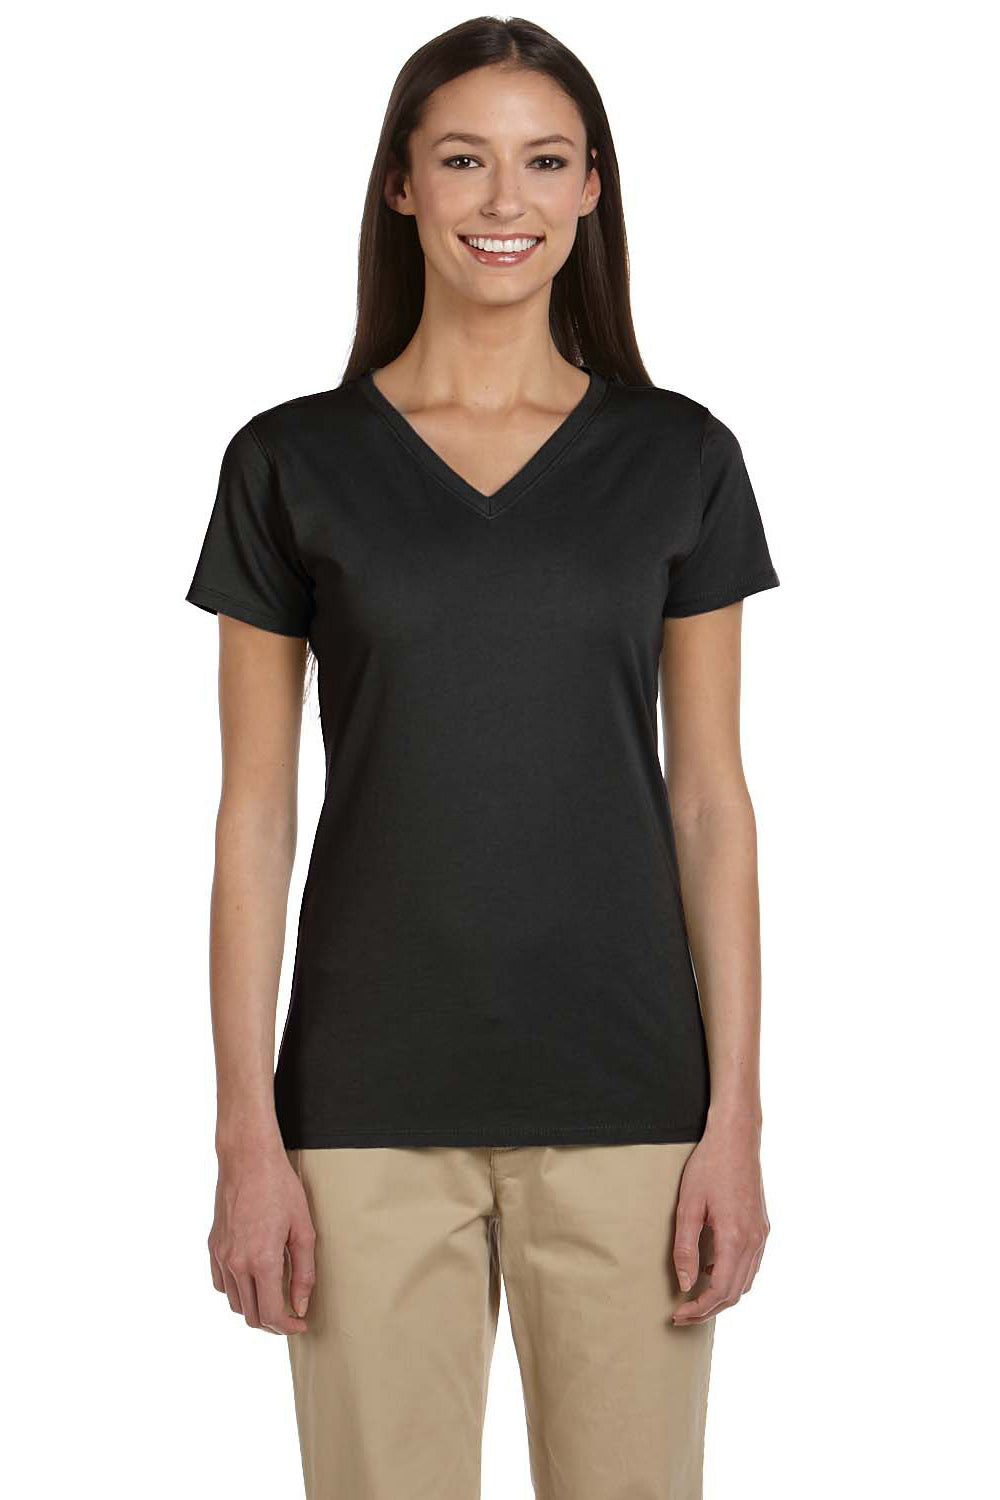 Econscious EC3052 Womens Short Sleeve V-Neck T-Shirt Black Front